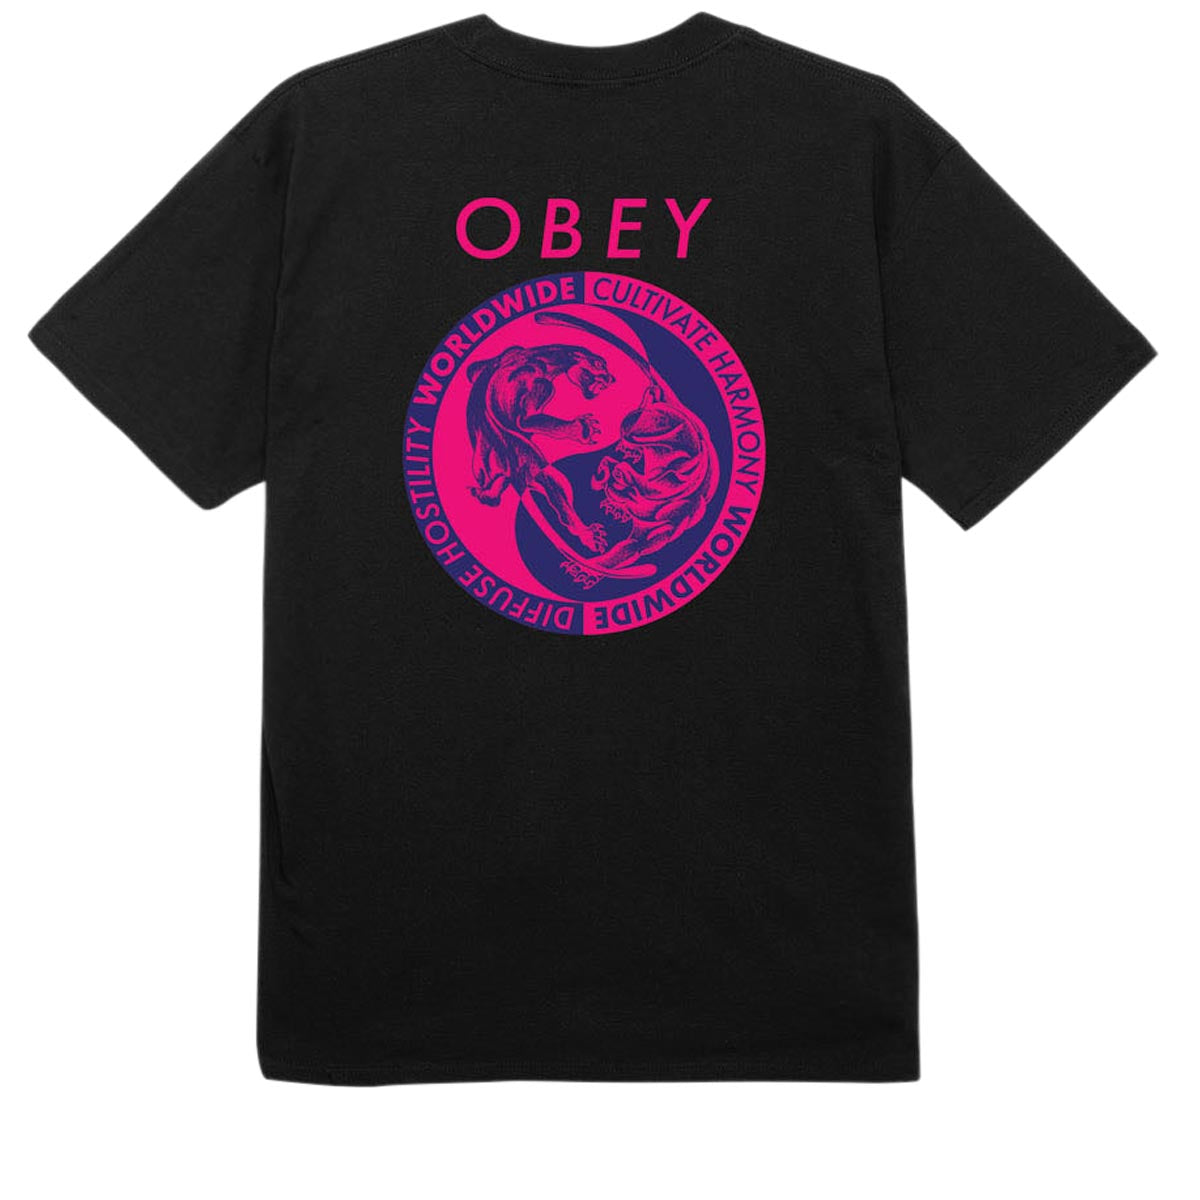 Obey Yin Yang Panthers T-Shirt - Black image 1